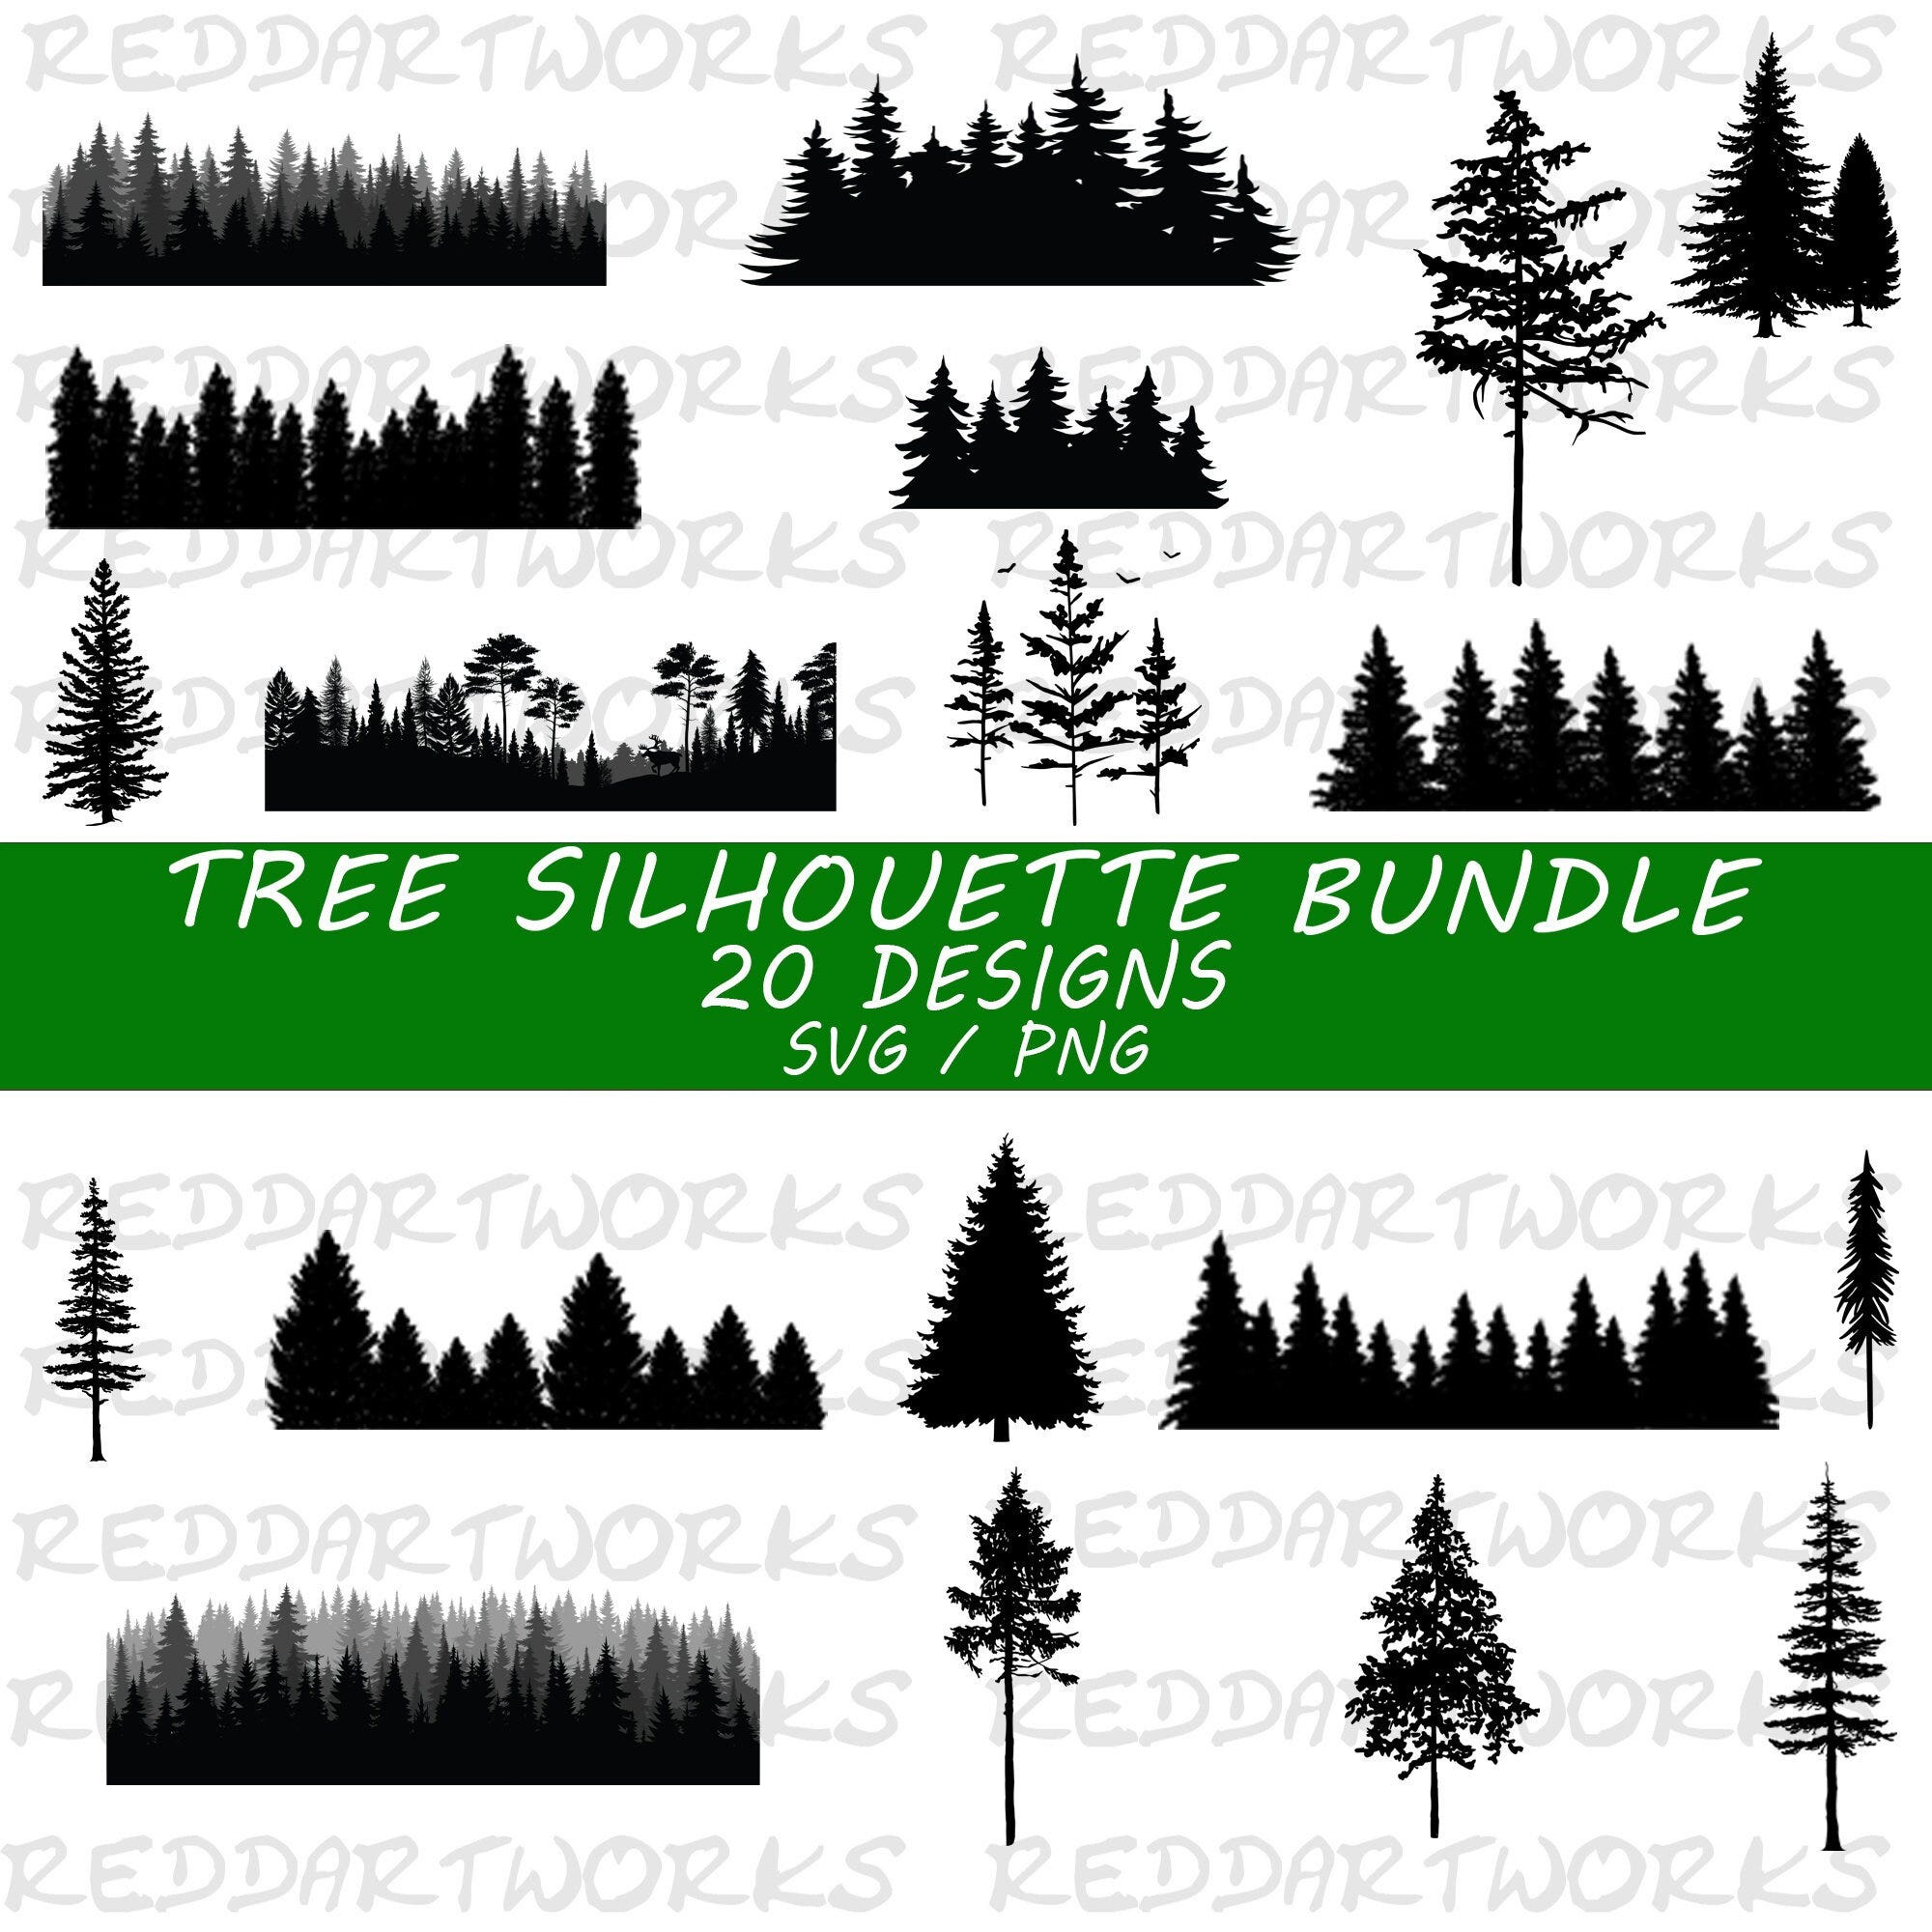 Tree Silhouette Svg| Pine tree svg| Pine tree silhouette| Evergreen tree svg| Pine tree Cricut| Pine tree clipart| Pine tree cutfile